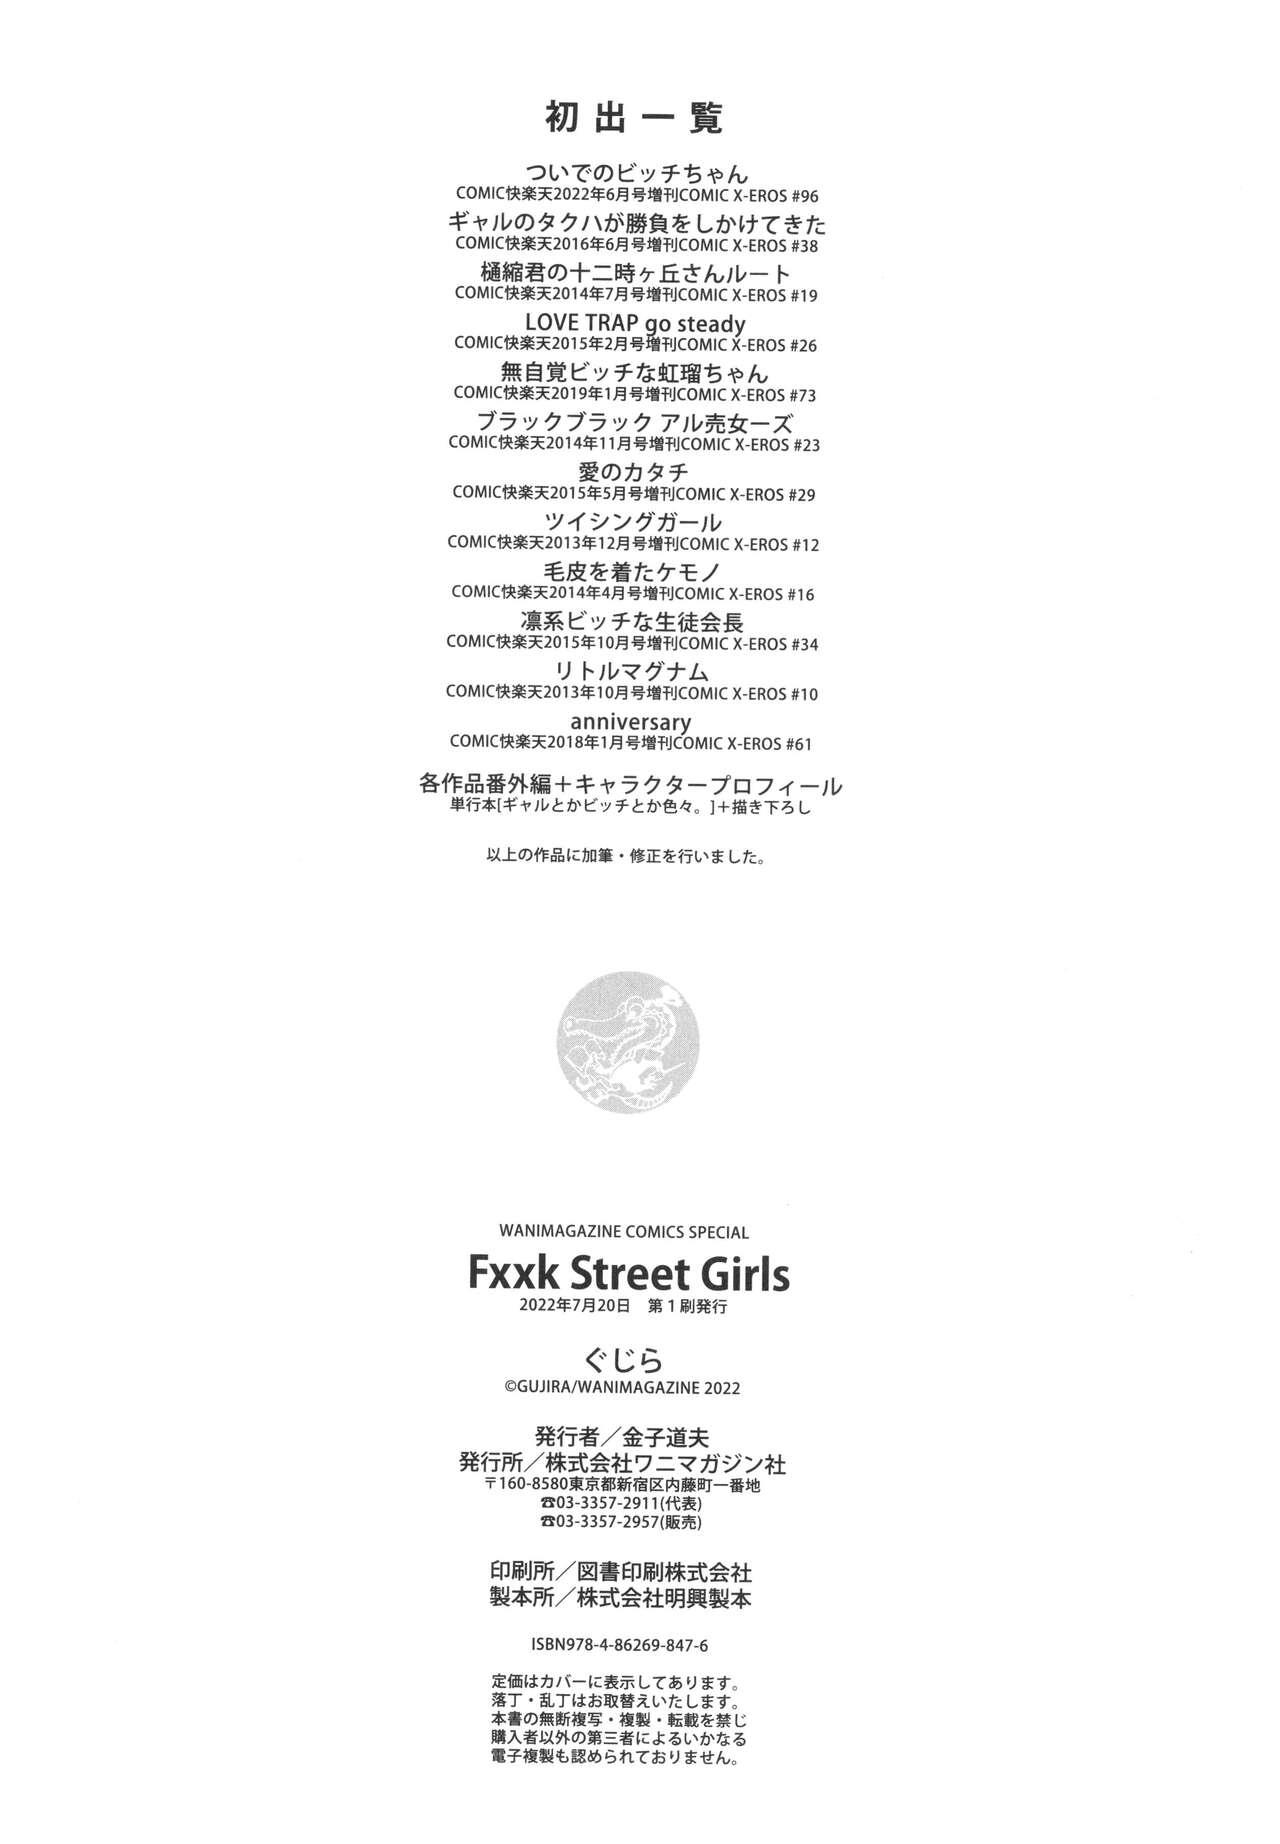 Fxxk Street Girls 318